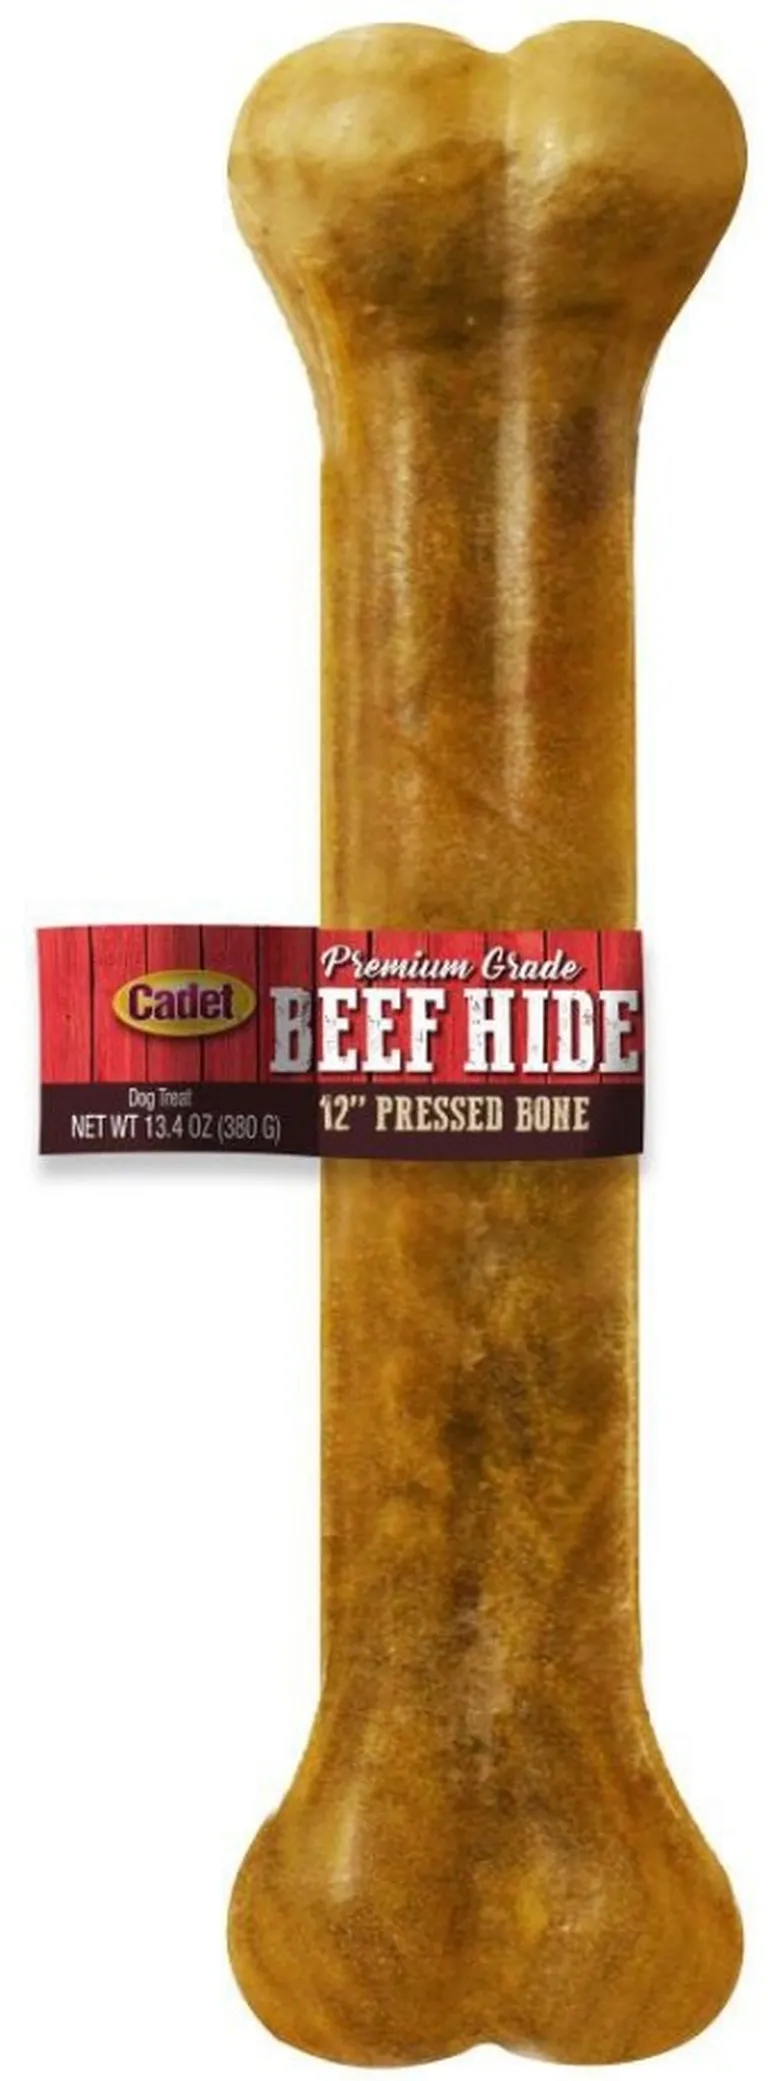 Cadet Premium Grade Pressed Beef Hide Bone 12 Inch Photo 1